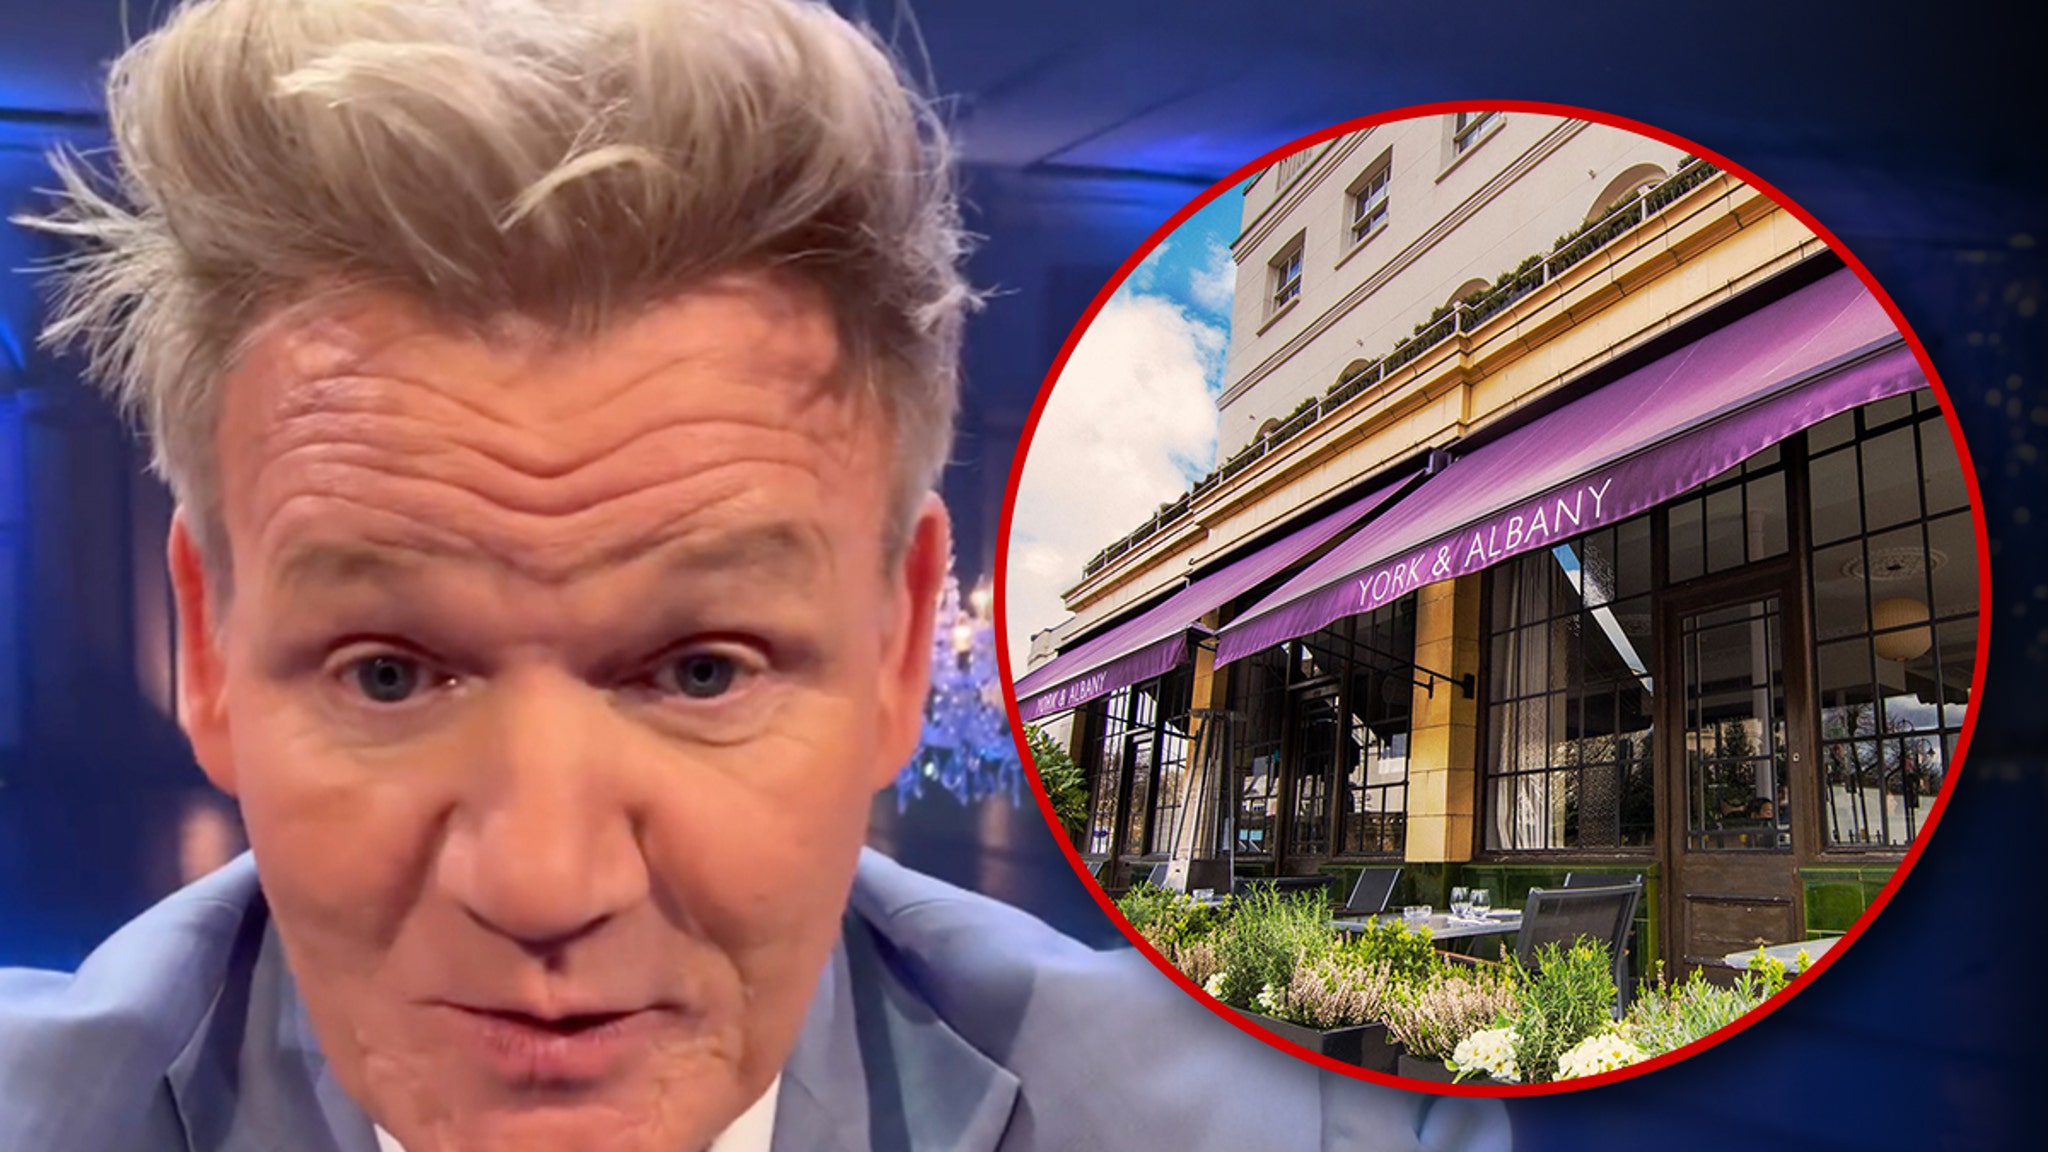 Gordon Ramsay's London Pub Infiltrated By Squatters - WorldNewsEra